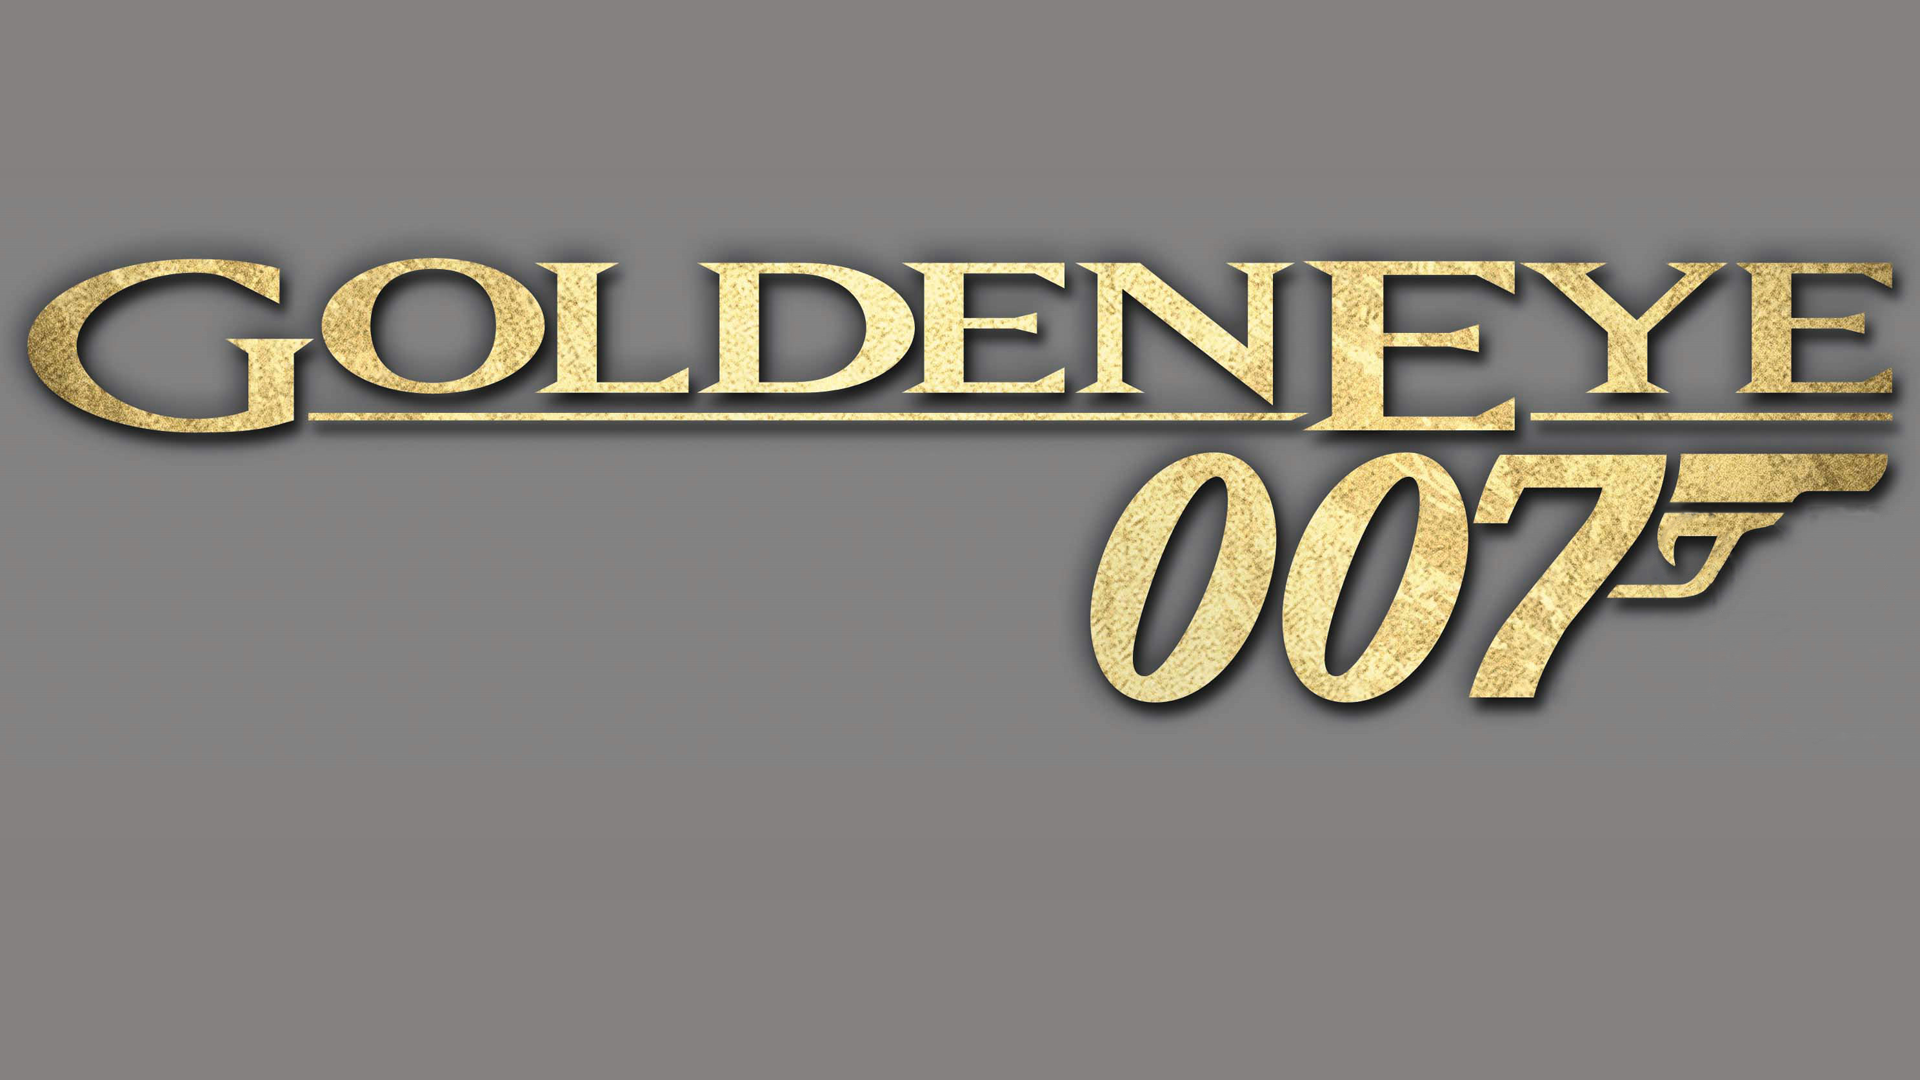 Goldeneye 007 (Wii) Logo